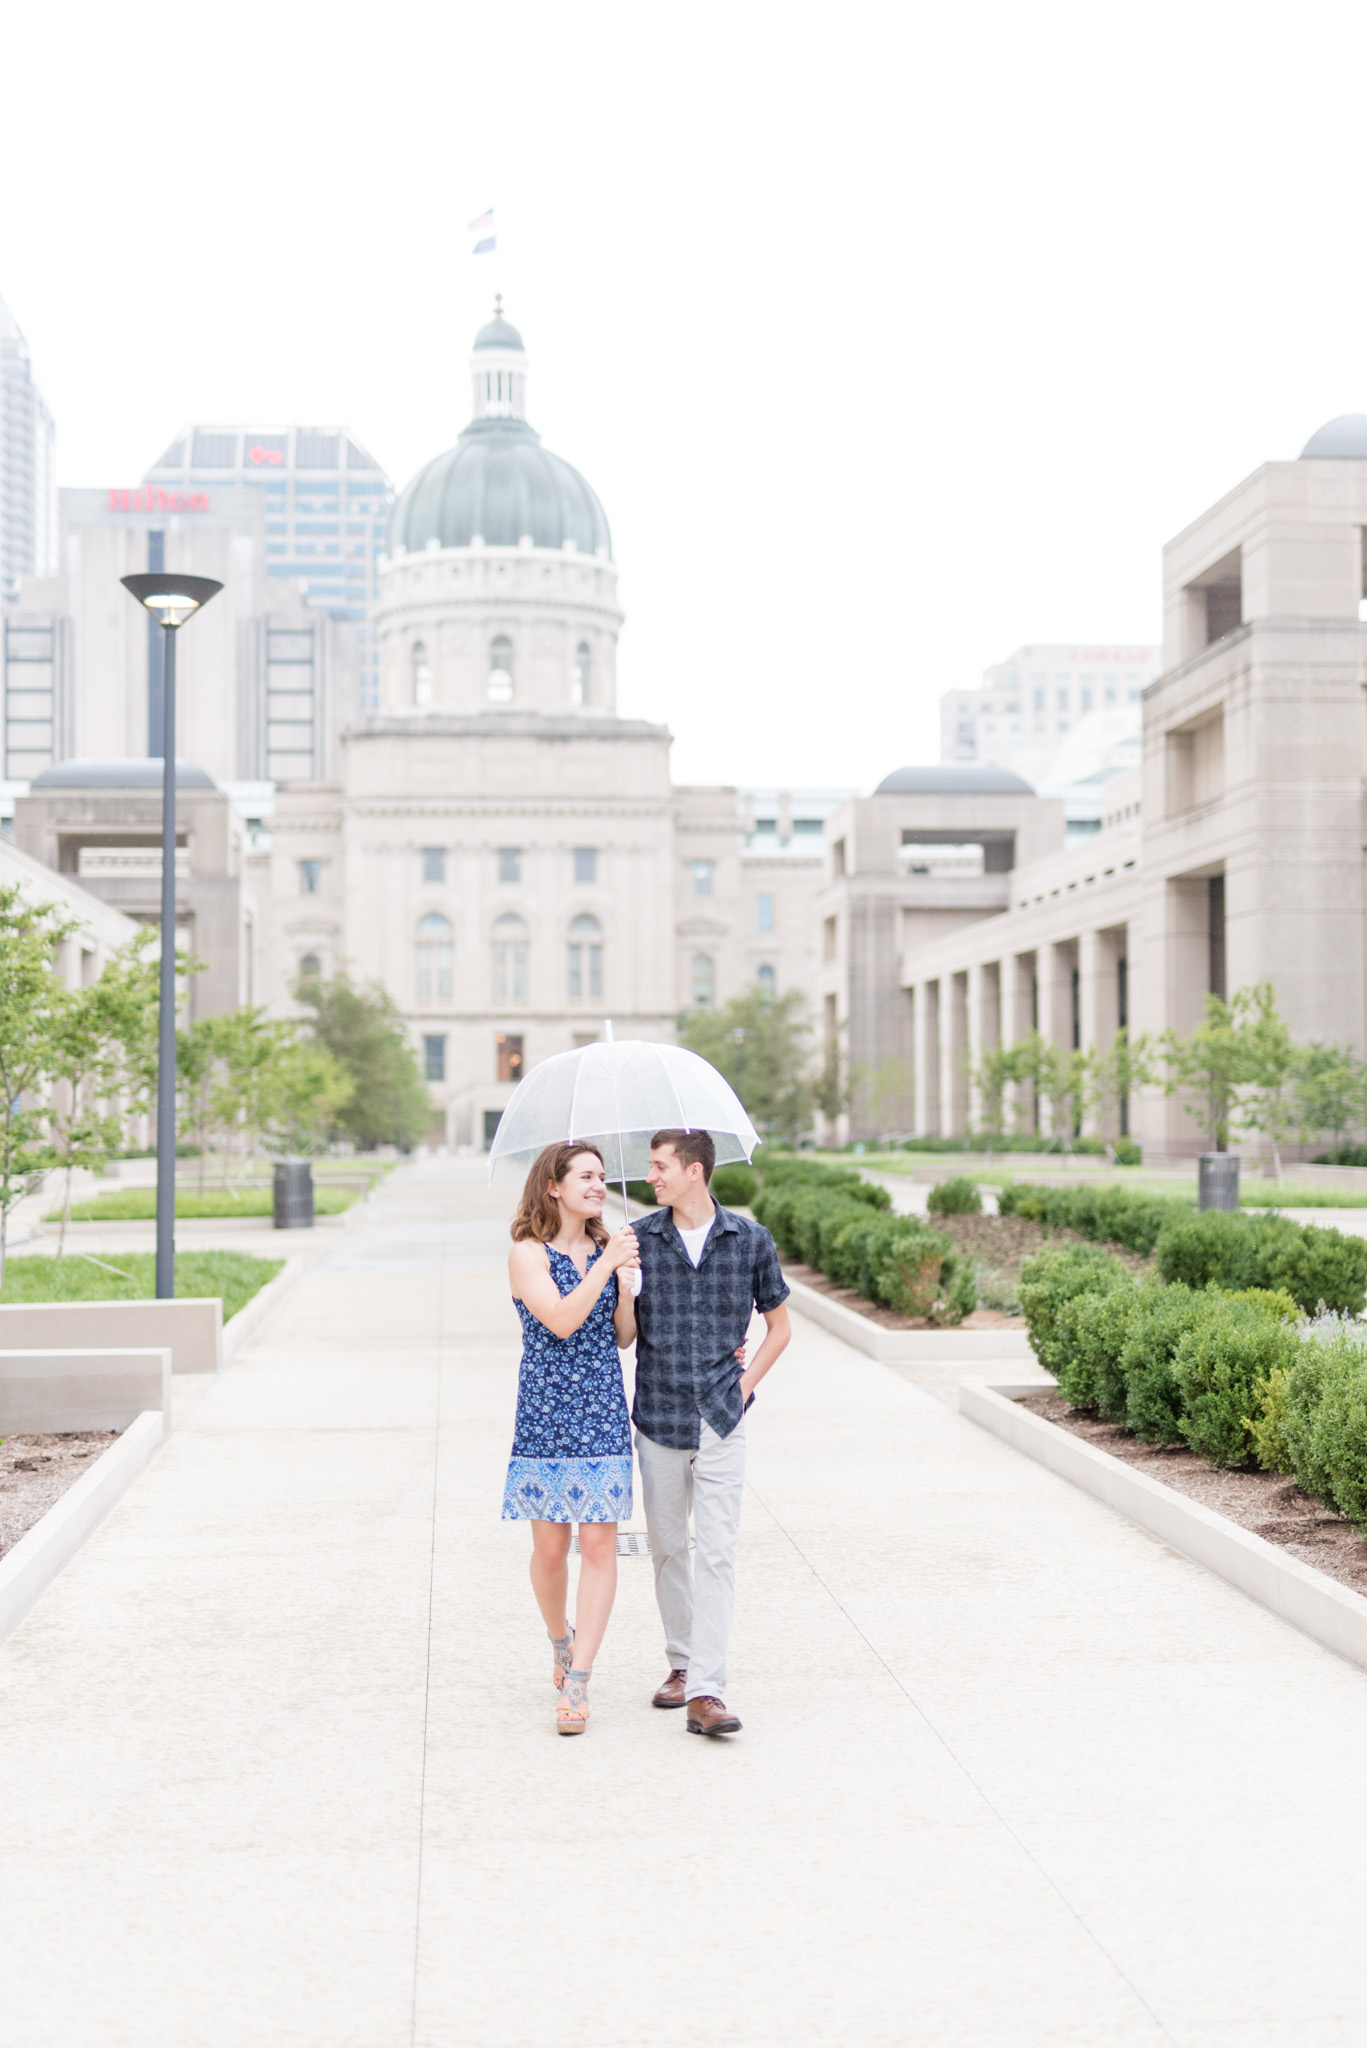 Couple walks under umbrella.